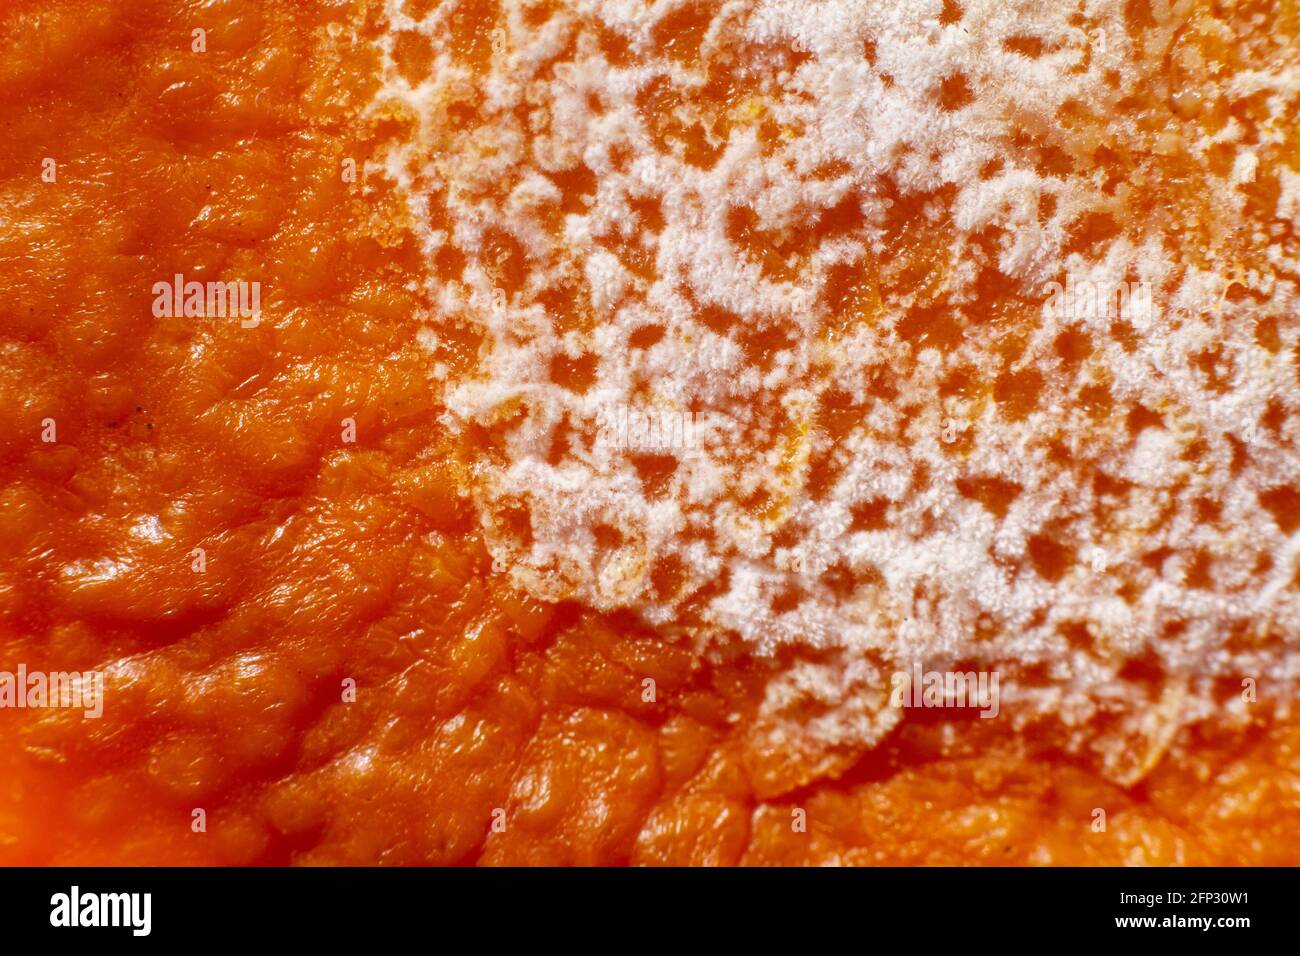 Moldy rotten orange isolated on wooden stock. extreme close up. Stock Photo